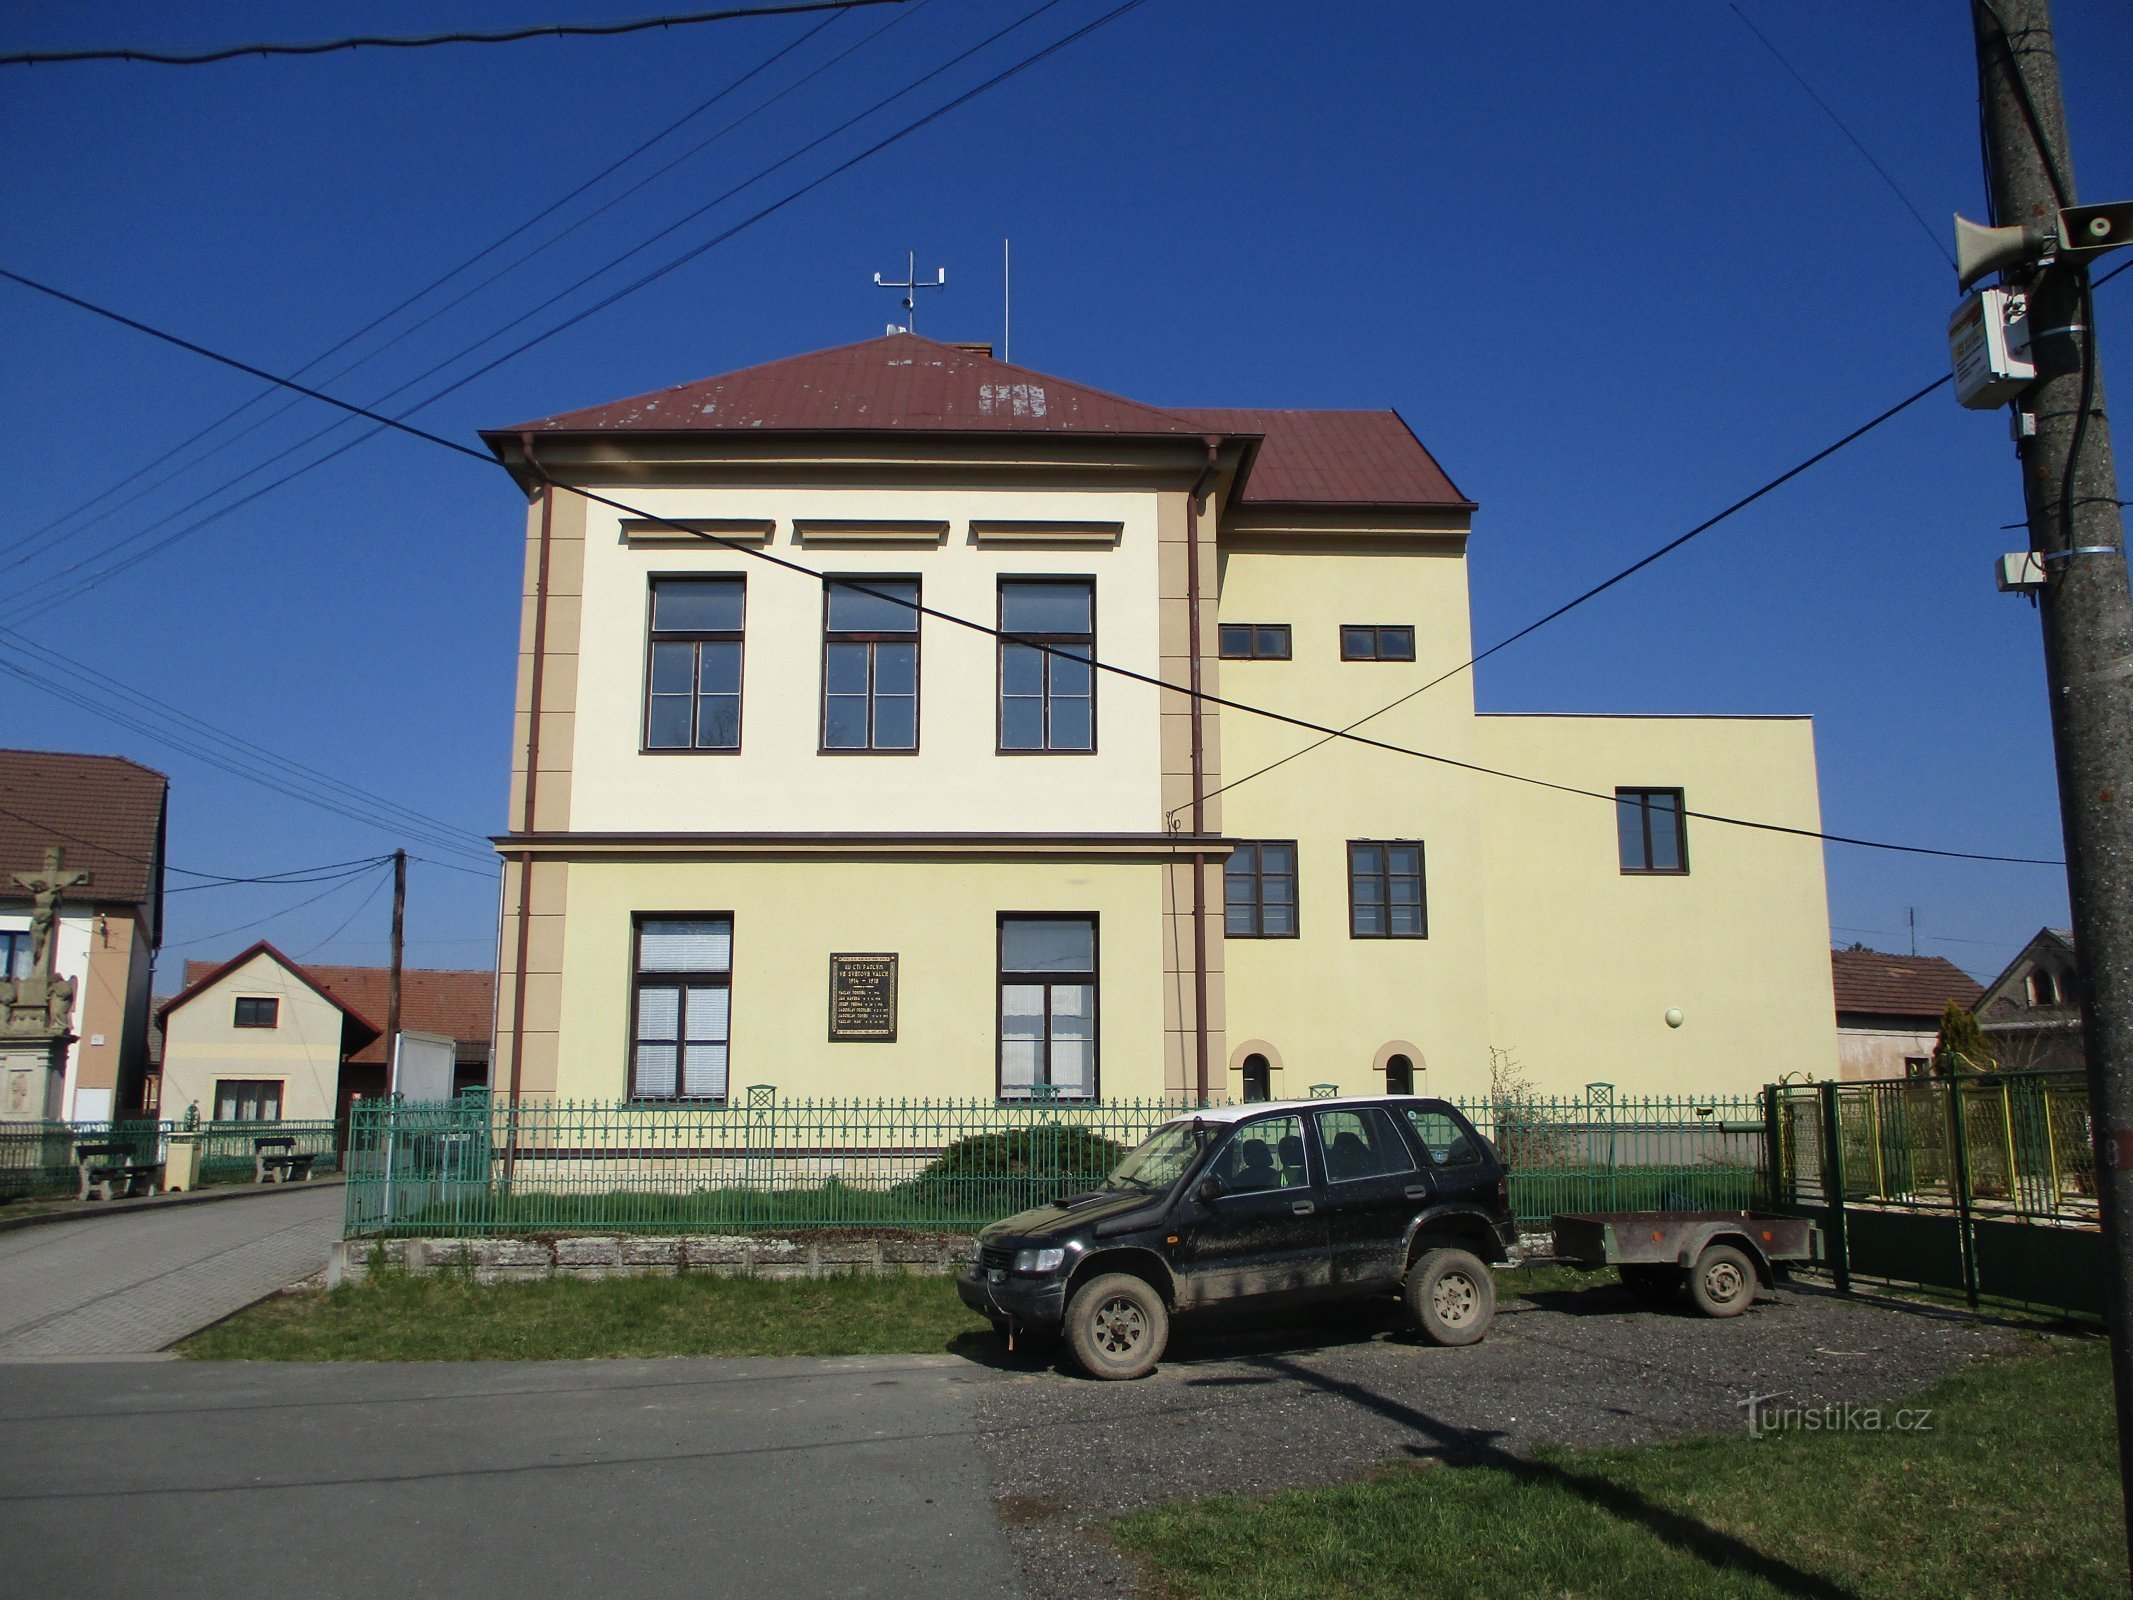 Iskola bővítéssel (Račice nad Trotinou, 2.4.2020. április XNUMX.)